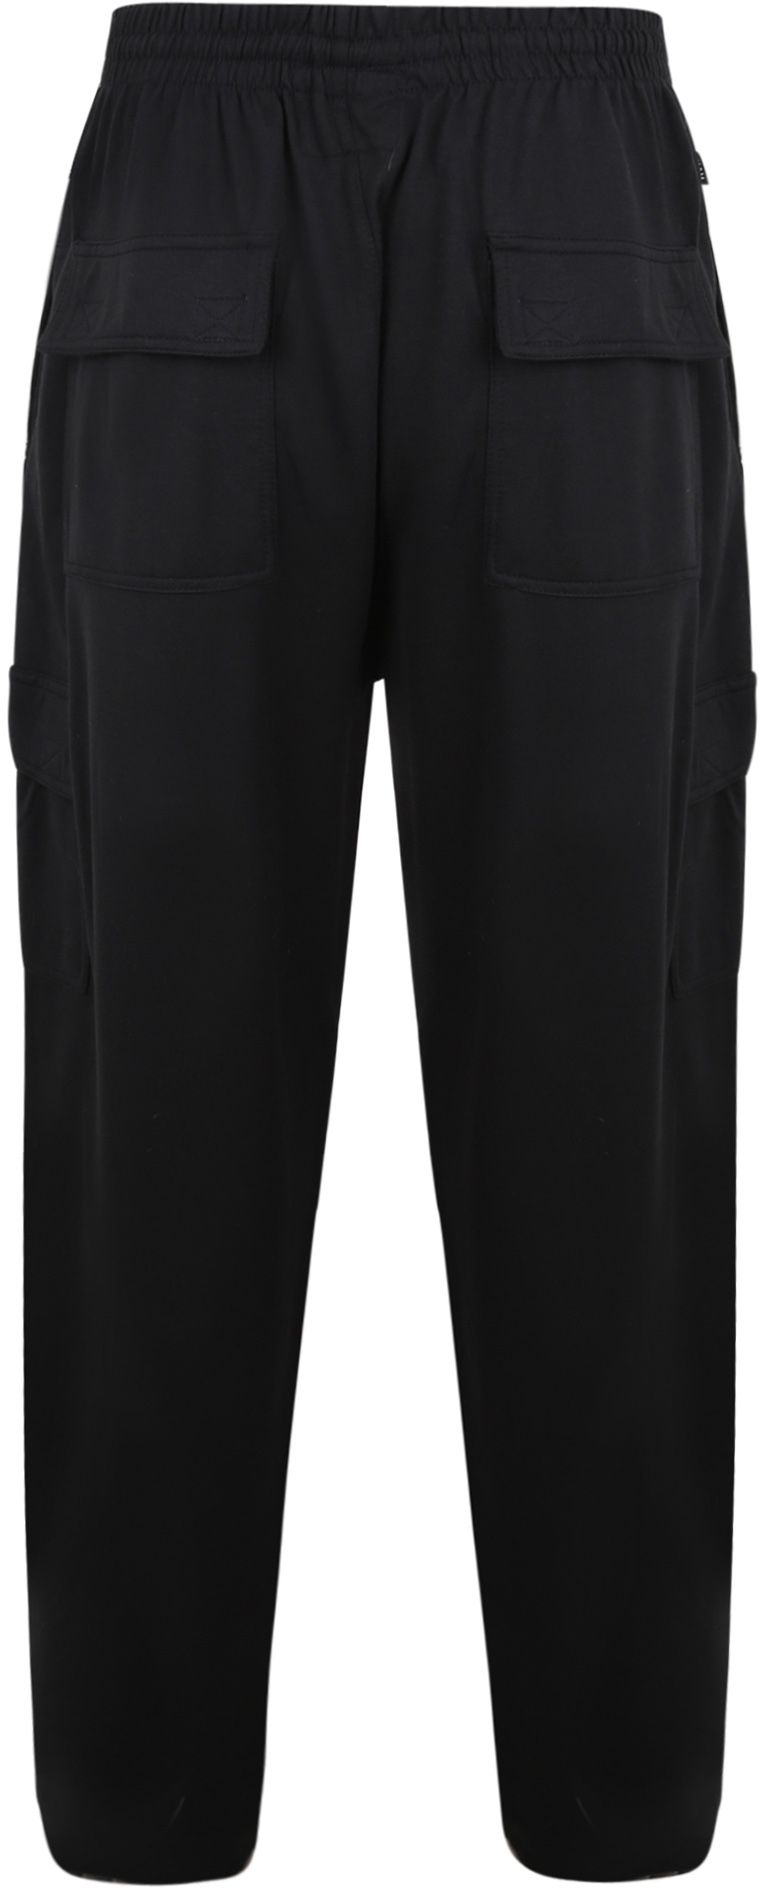 Pantalon de Jogging Noir Grande Taille KAM JEANSWEAR Taille Haute